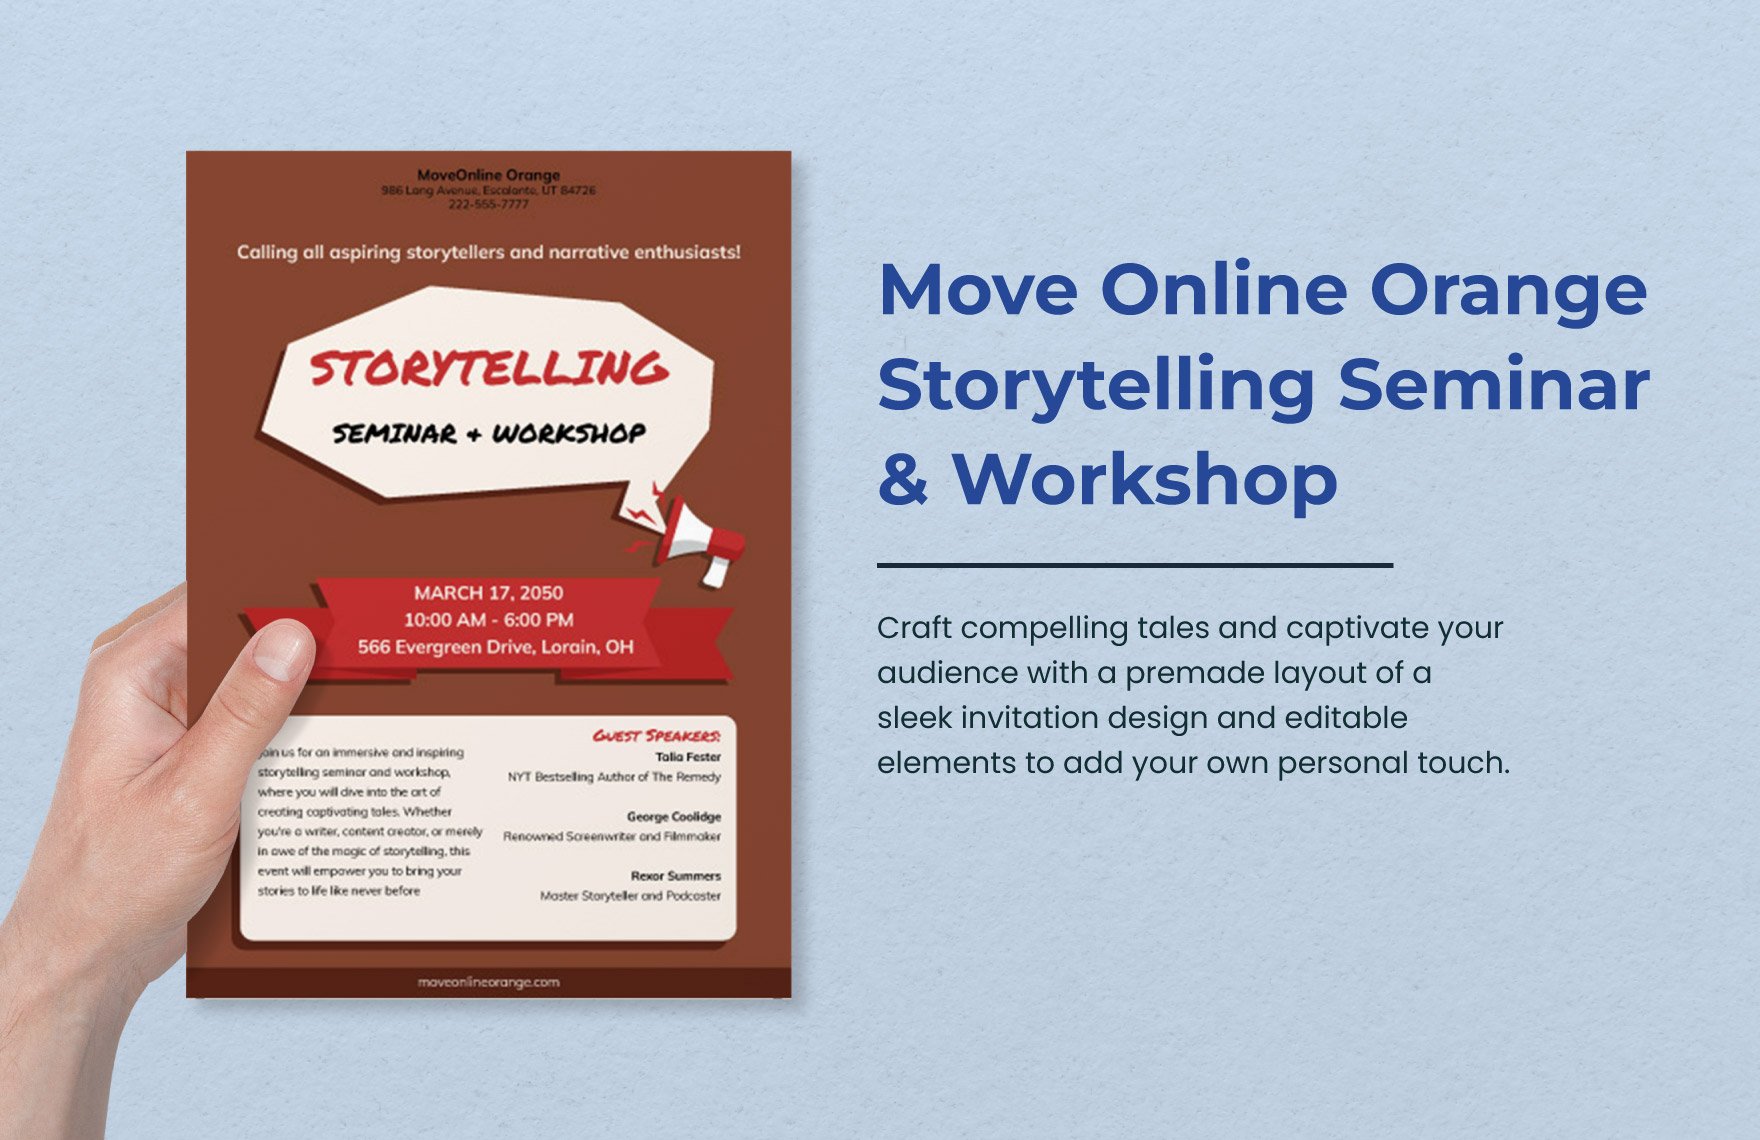 Move Online Orange Storytelling Seminar & Workshop